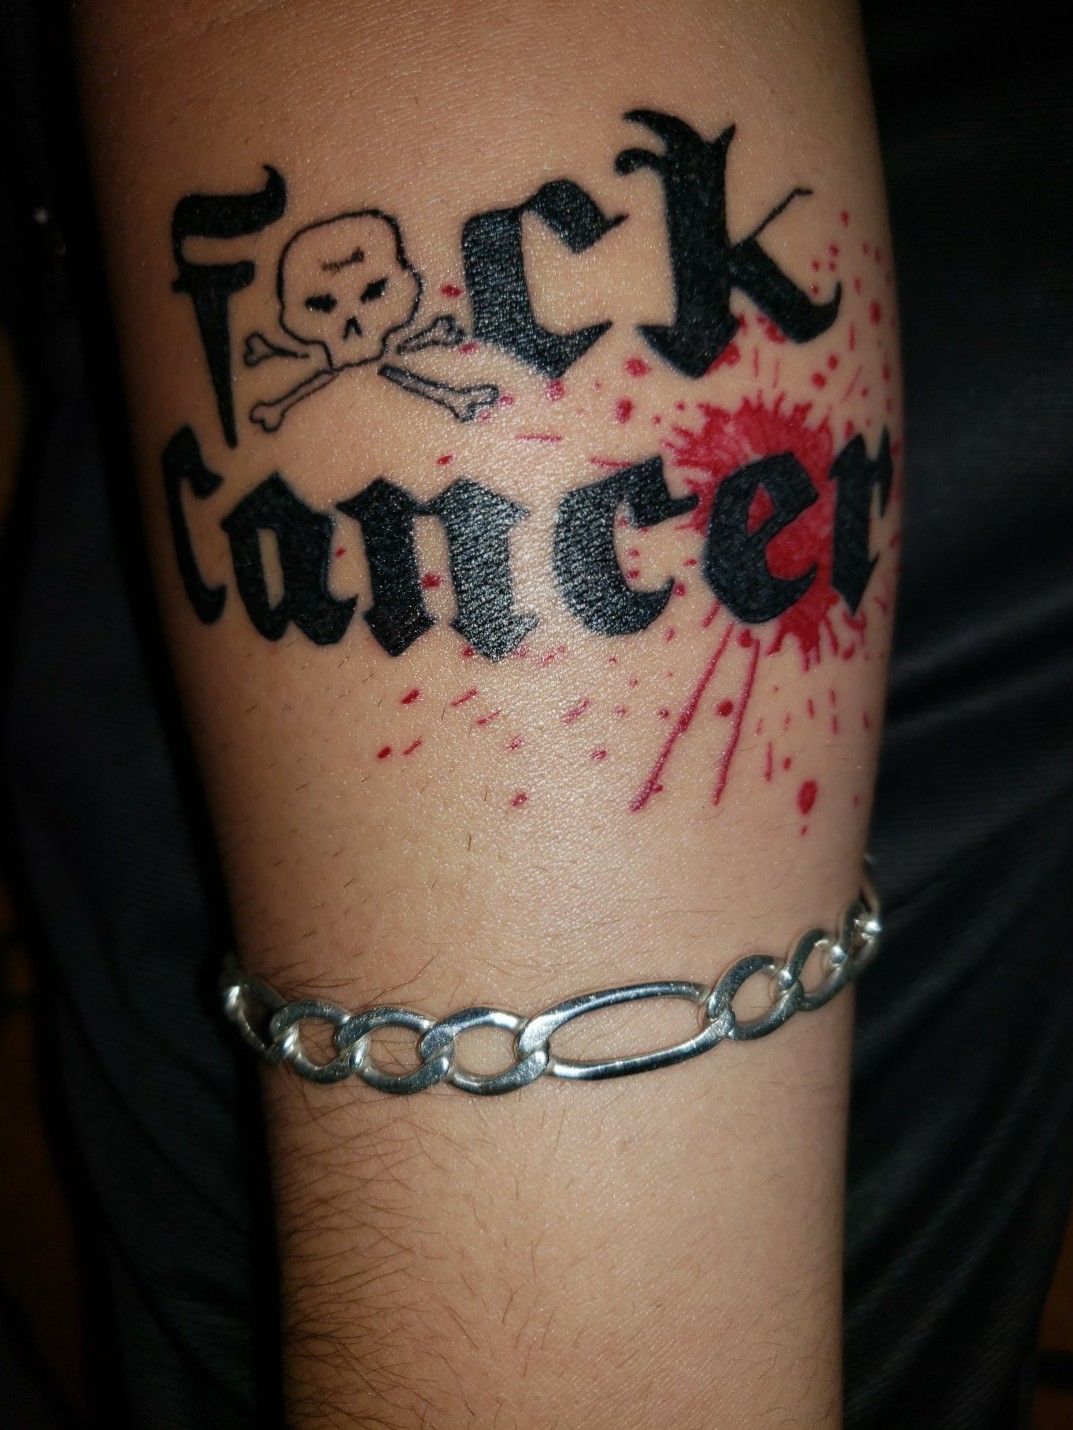 Fuck Cancer Writing Tattoo